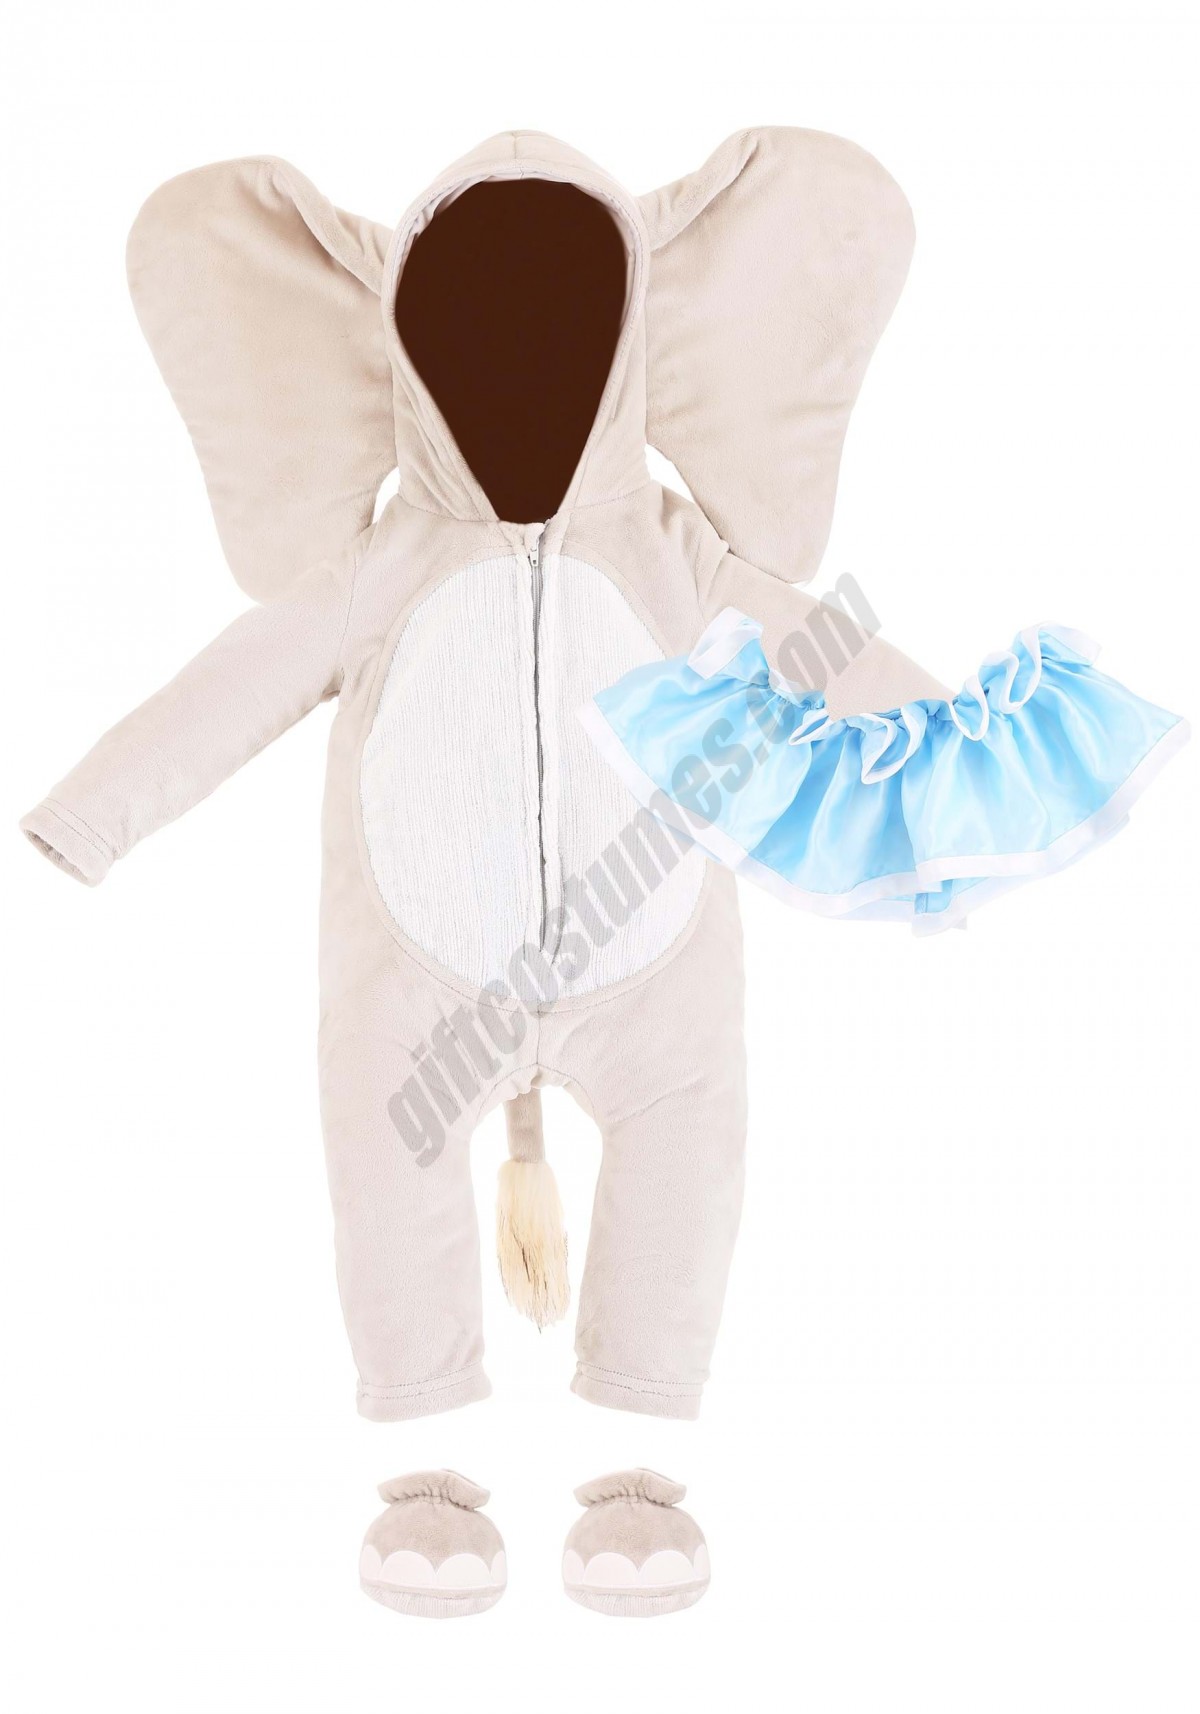 Elo the Elephant Infant Costume Promotions - -8